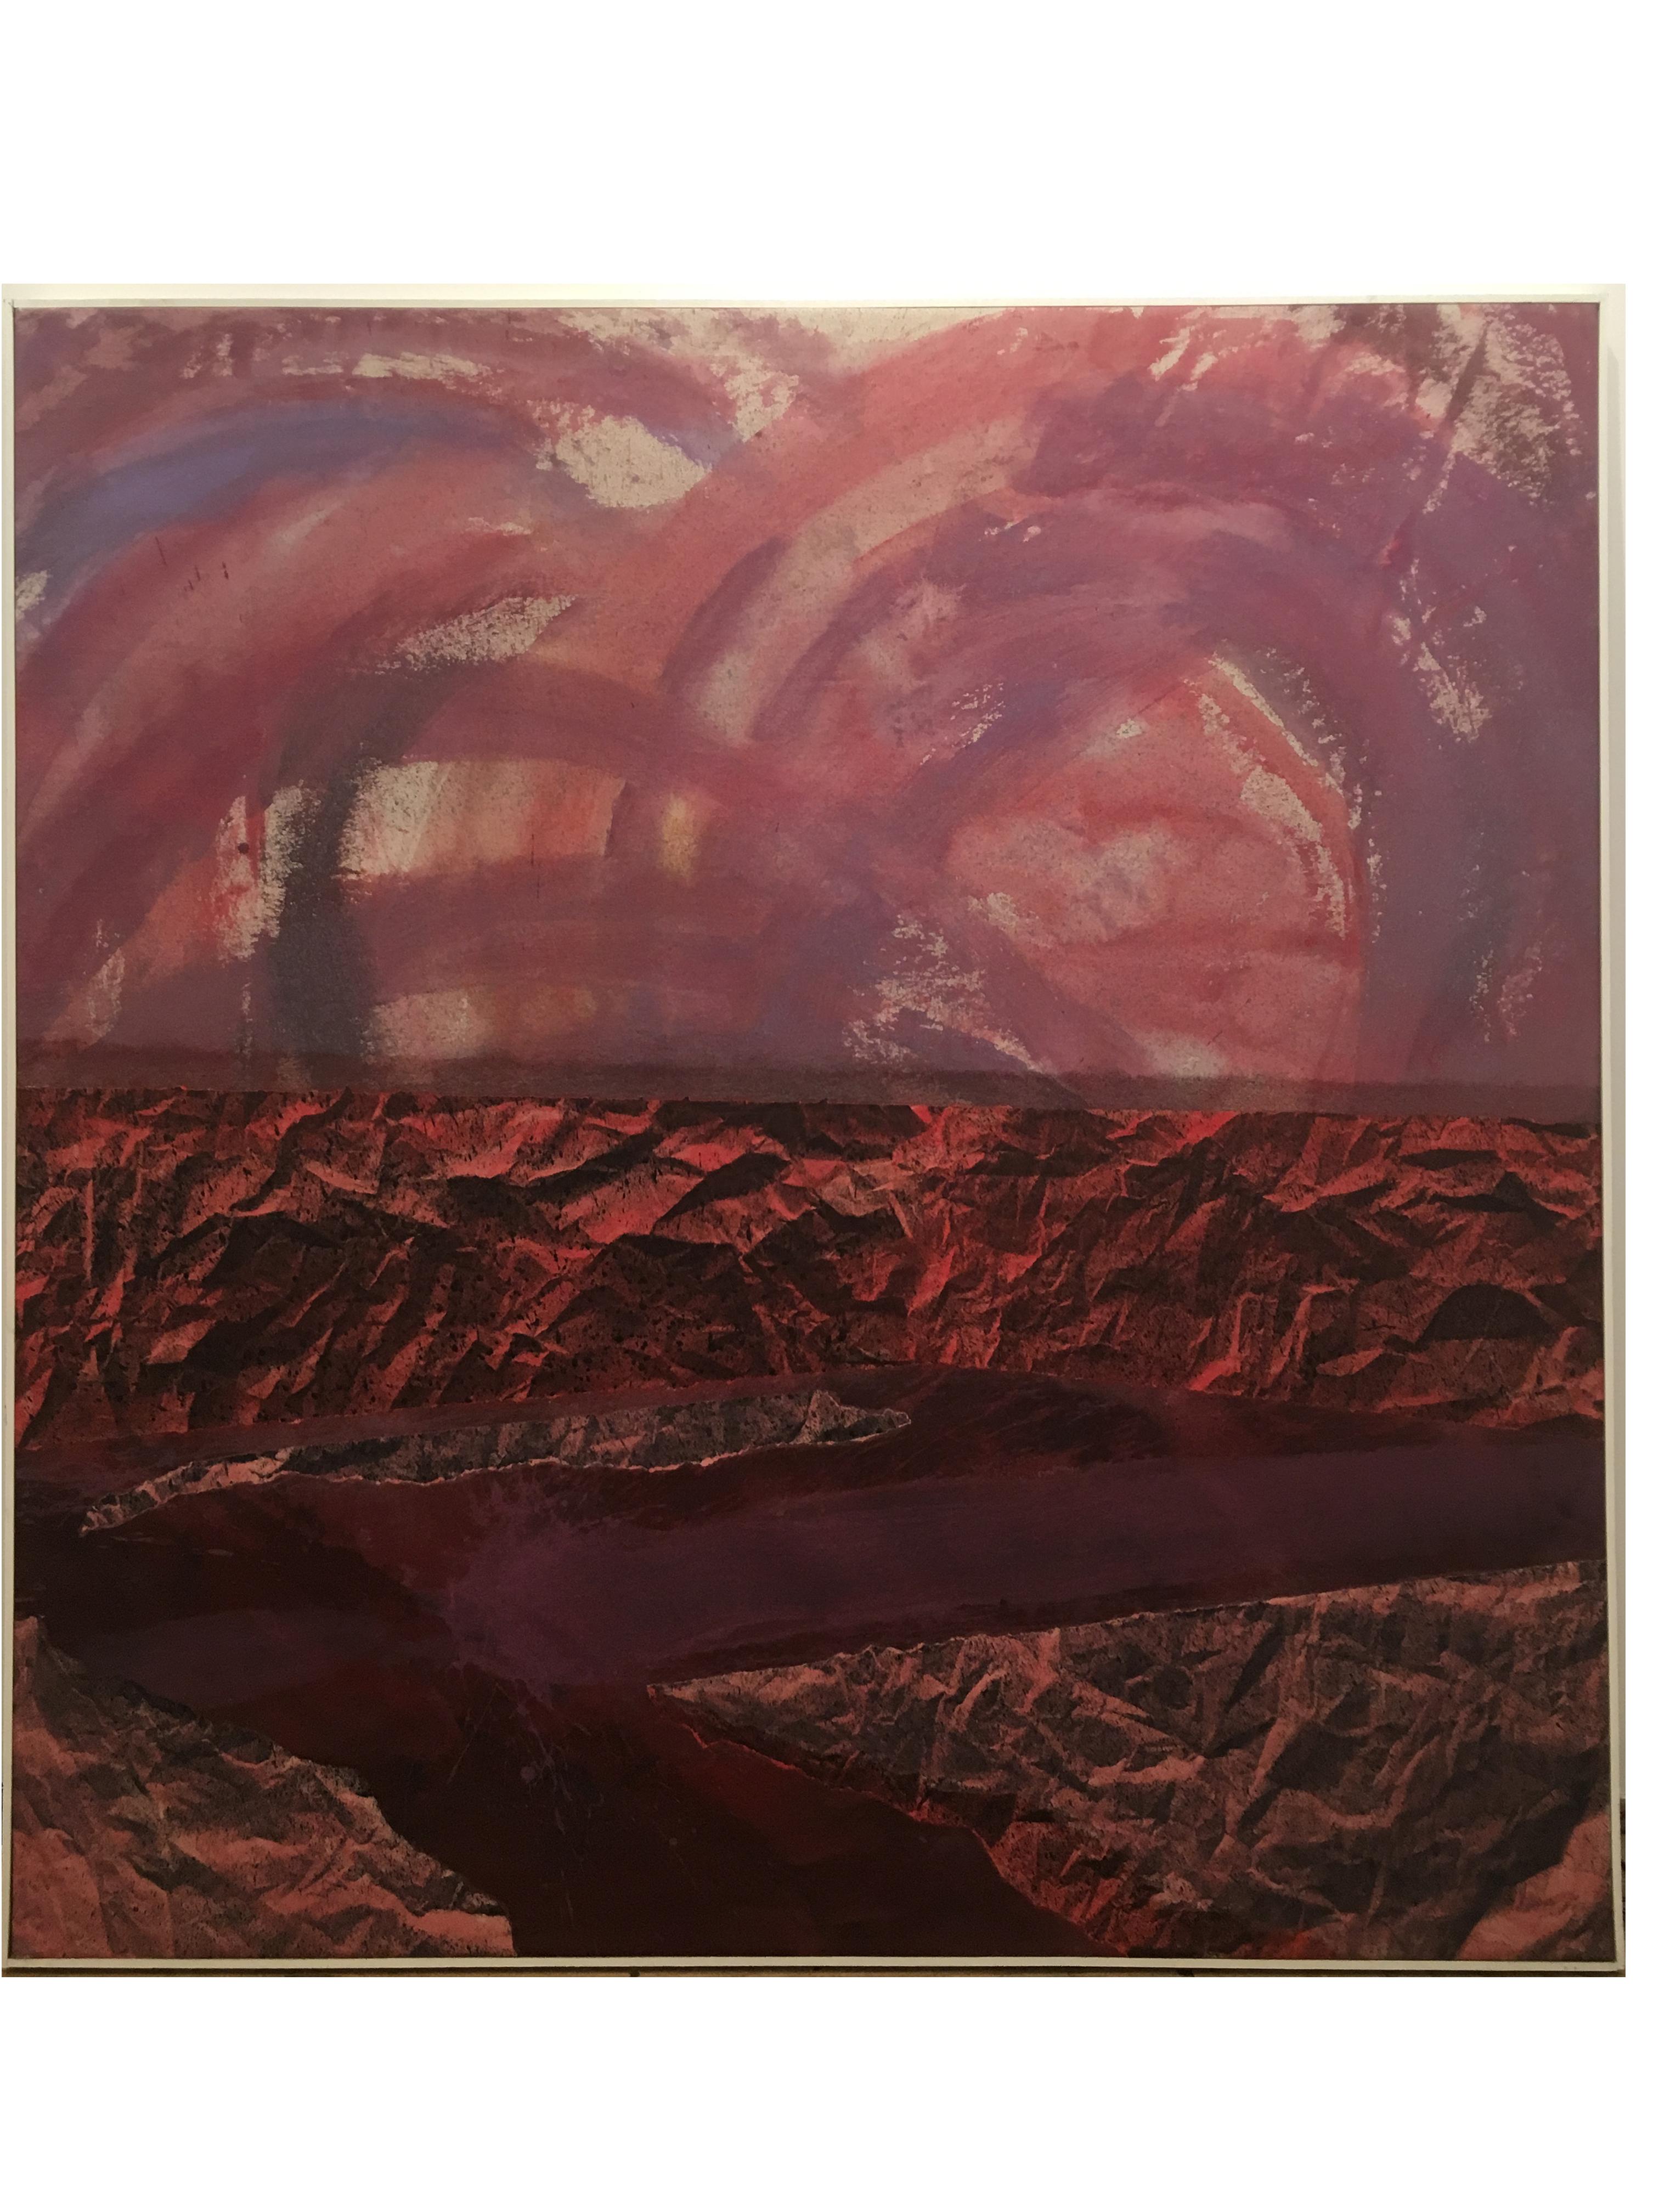 Pajtim Osmanaj Landscape Painting - Red Wine Oregon Pinot (mountainscape), landscape, spray paint, acrylic and paper